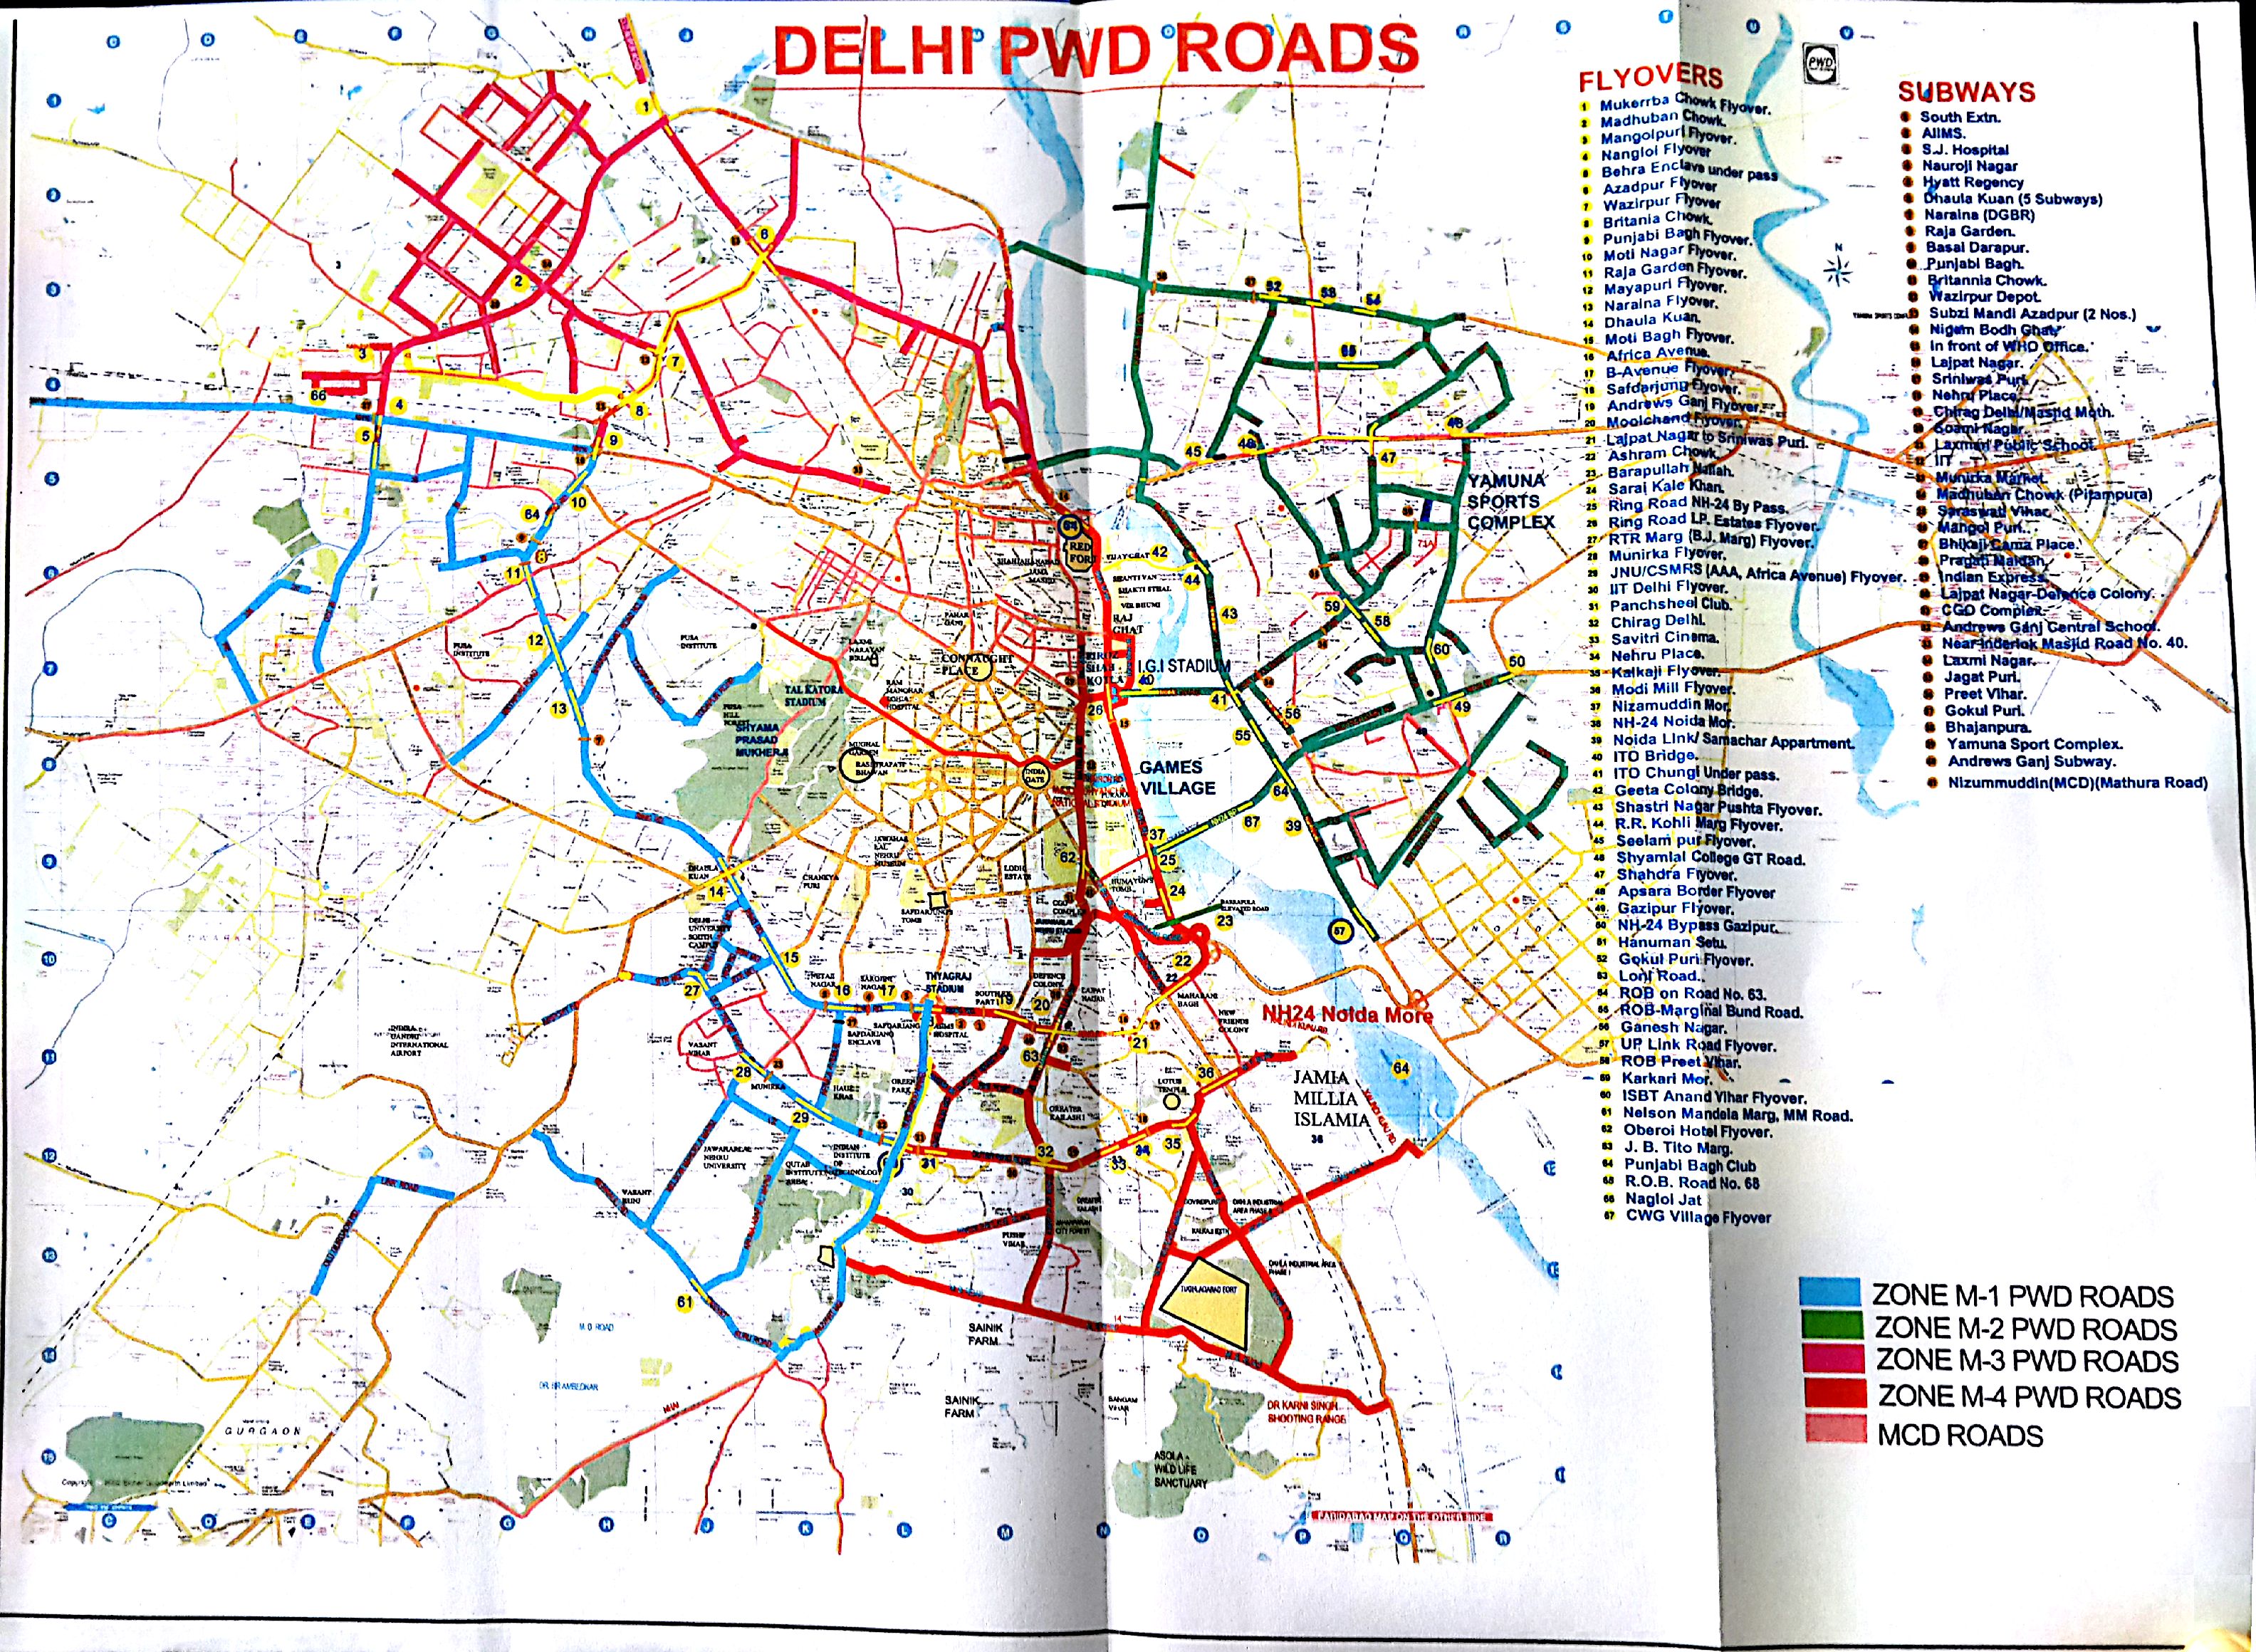 Public Works Department, Govt of NCT of Delhi